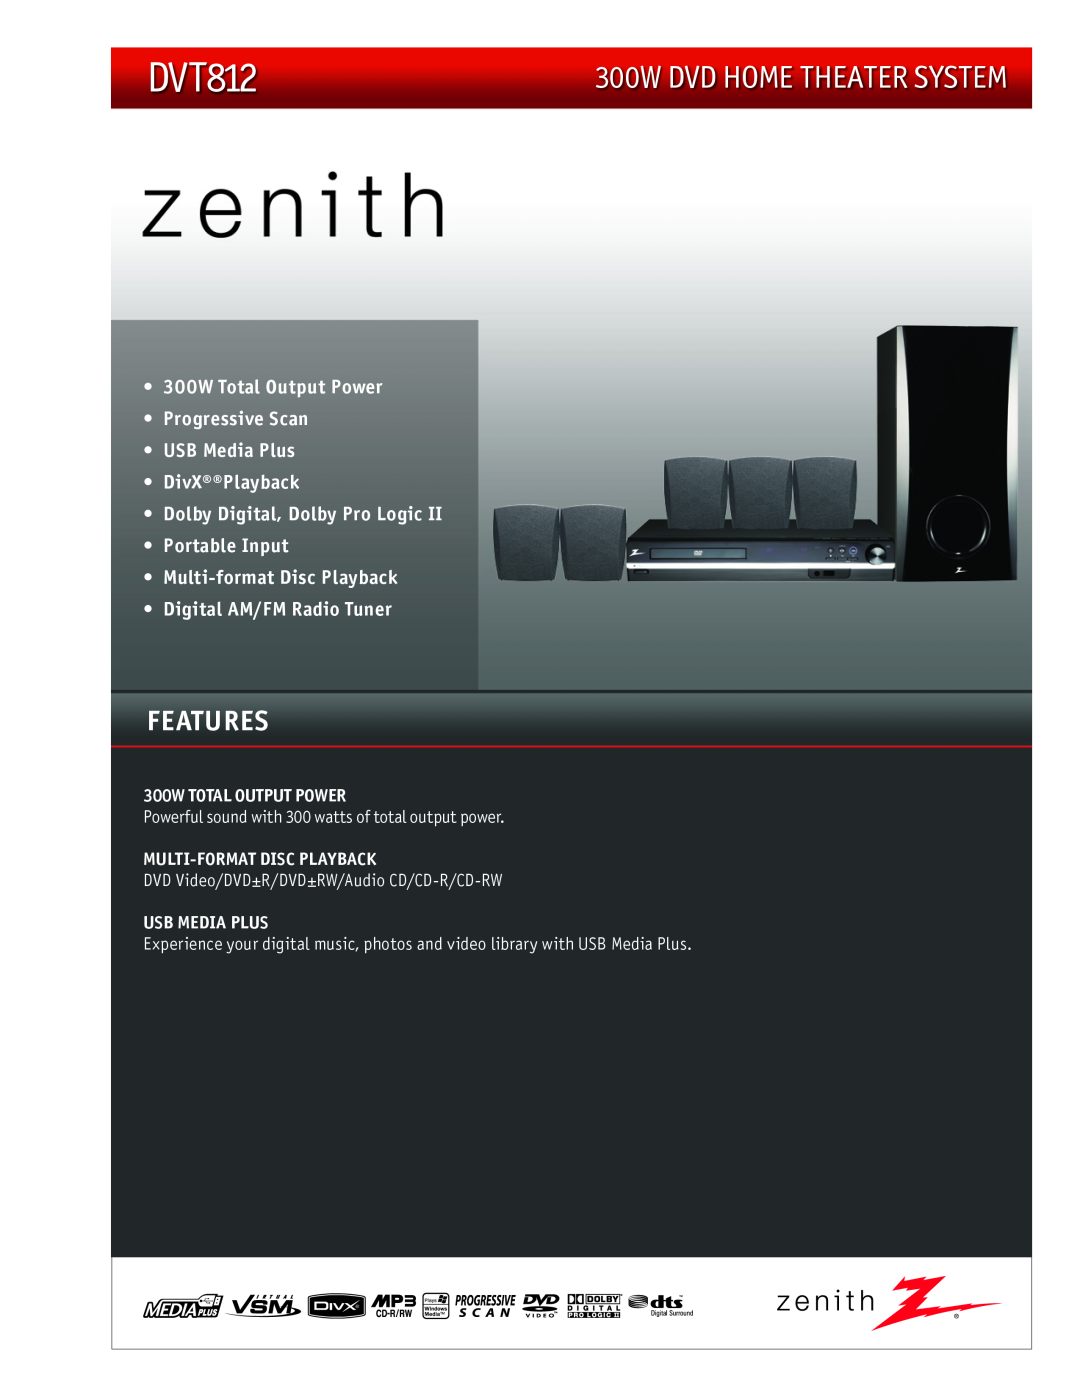 Zenith DVT812 manual 300W TOTAL OUTPUT POWER, Multi-Formatdisc Playback, Usb Media Plus, 300W DVD Home theater system 